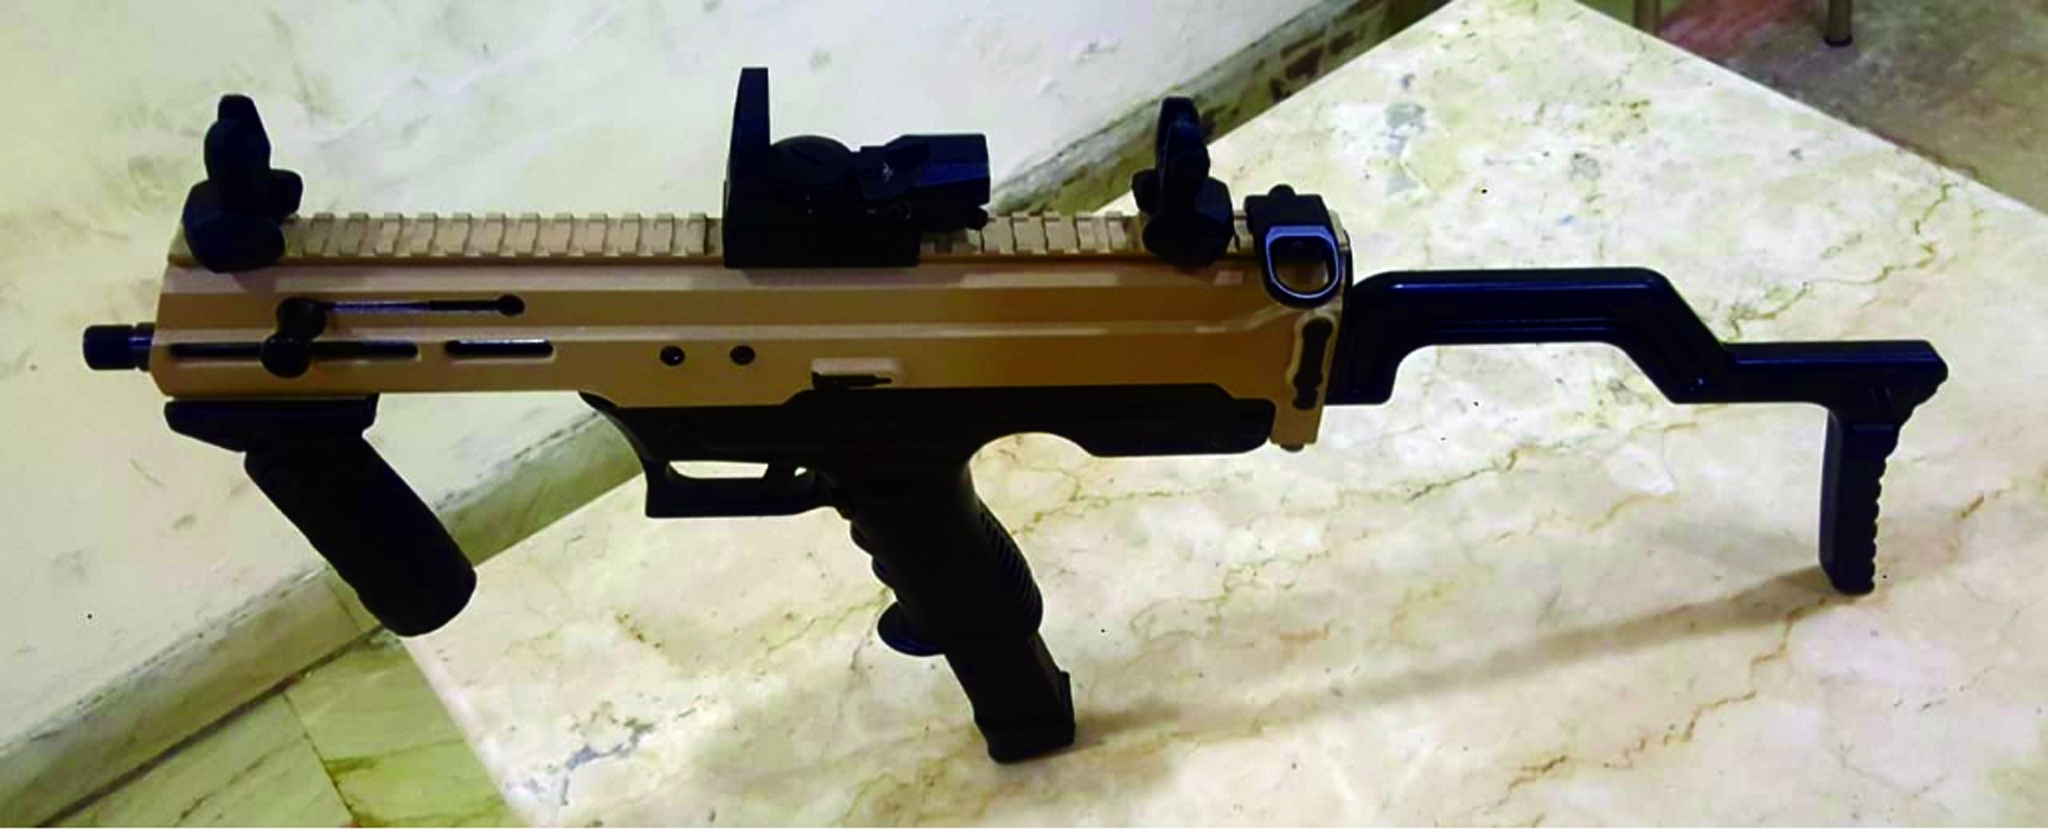 ASMI - 9 mm Pistol Gun - Indian Army - 01